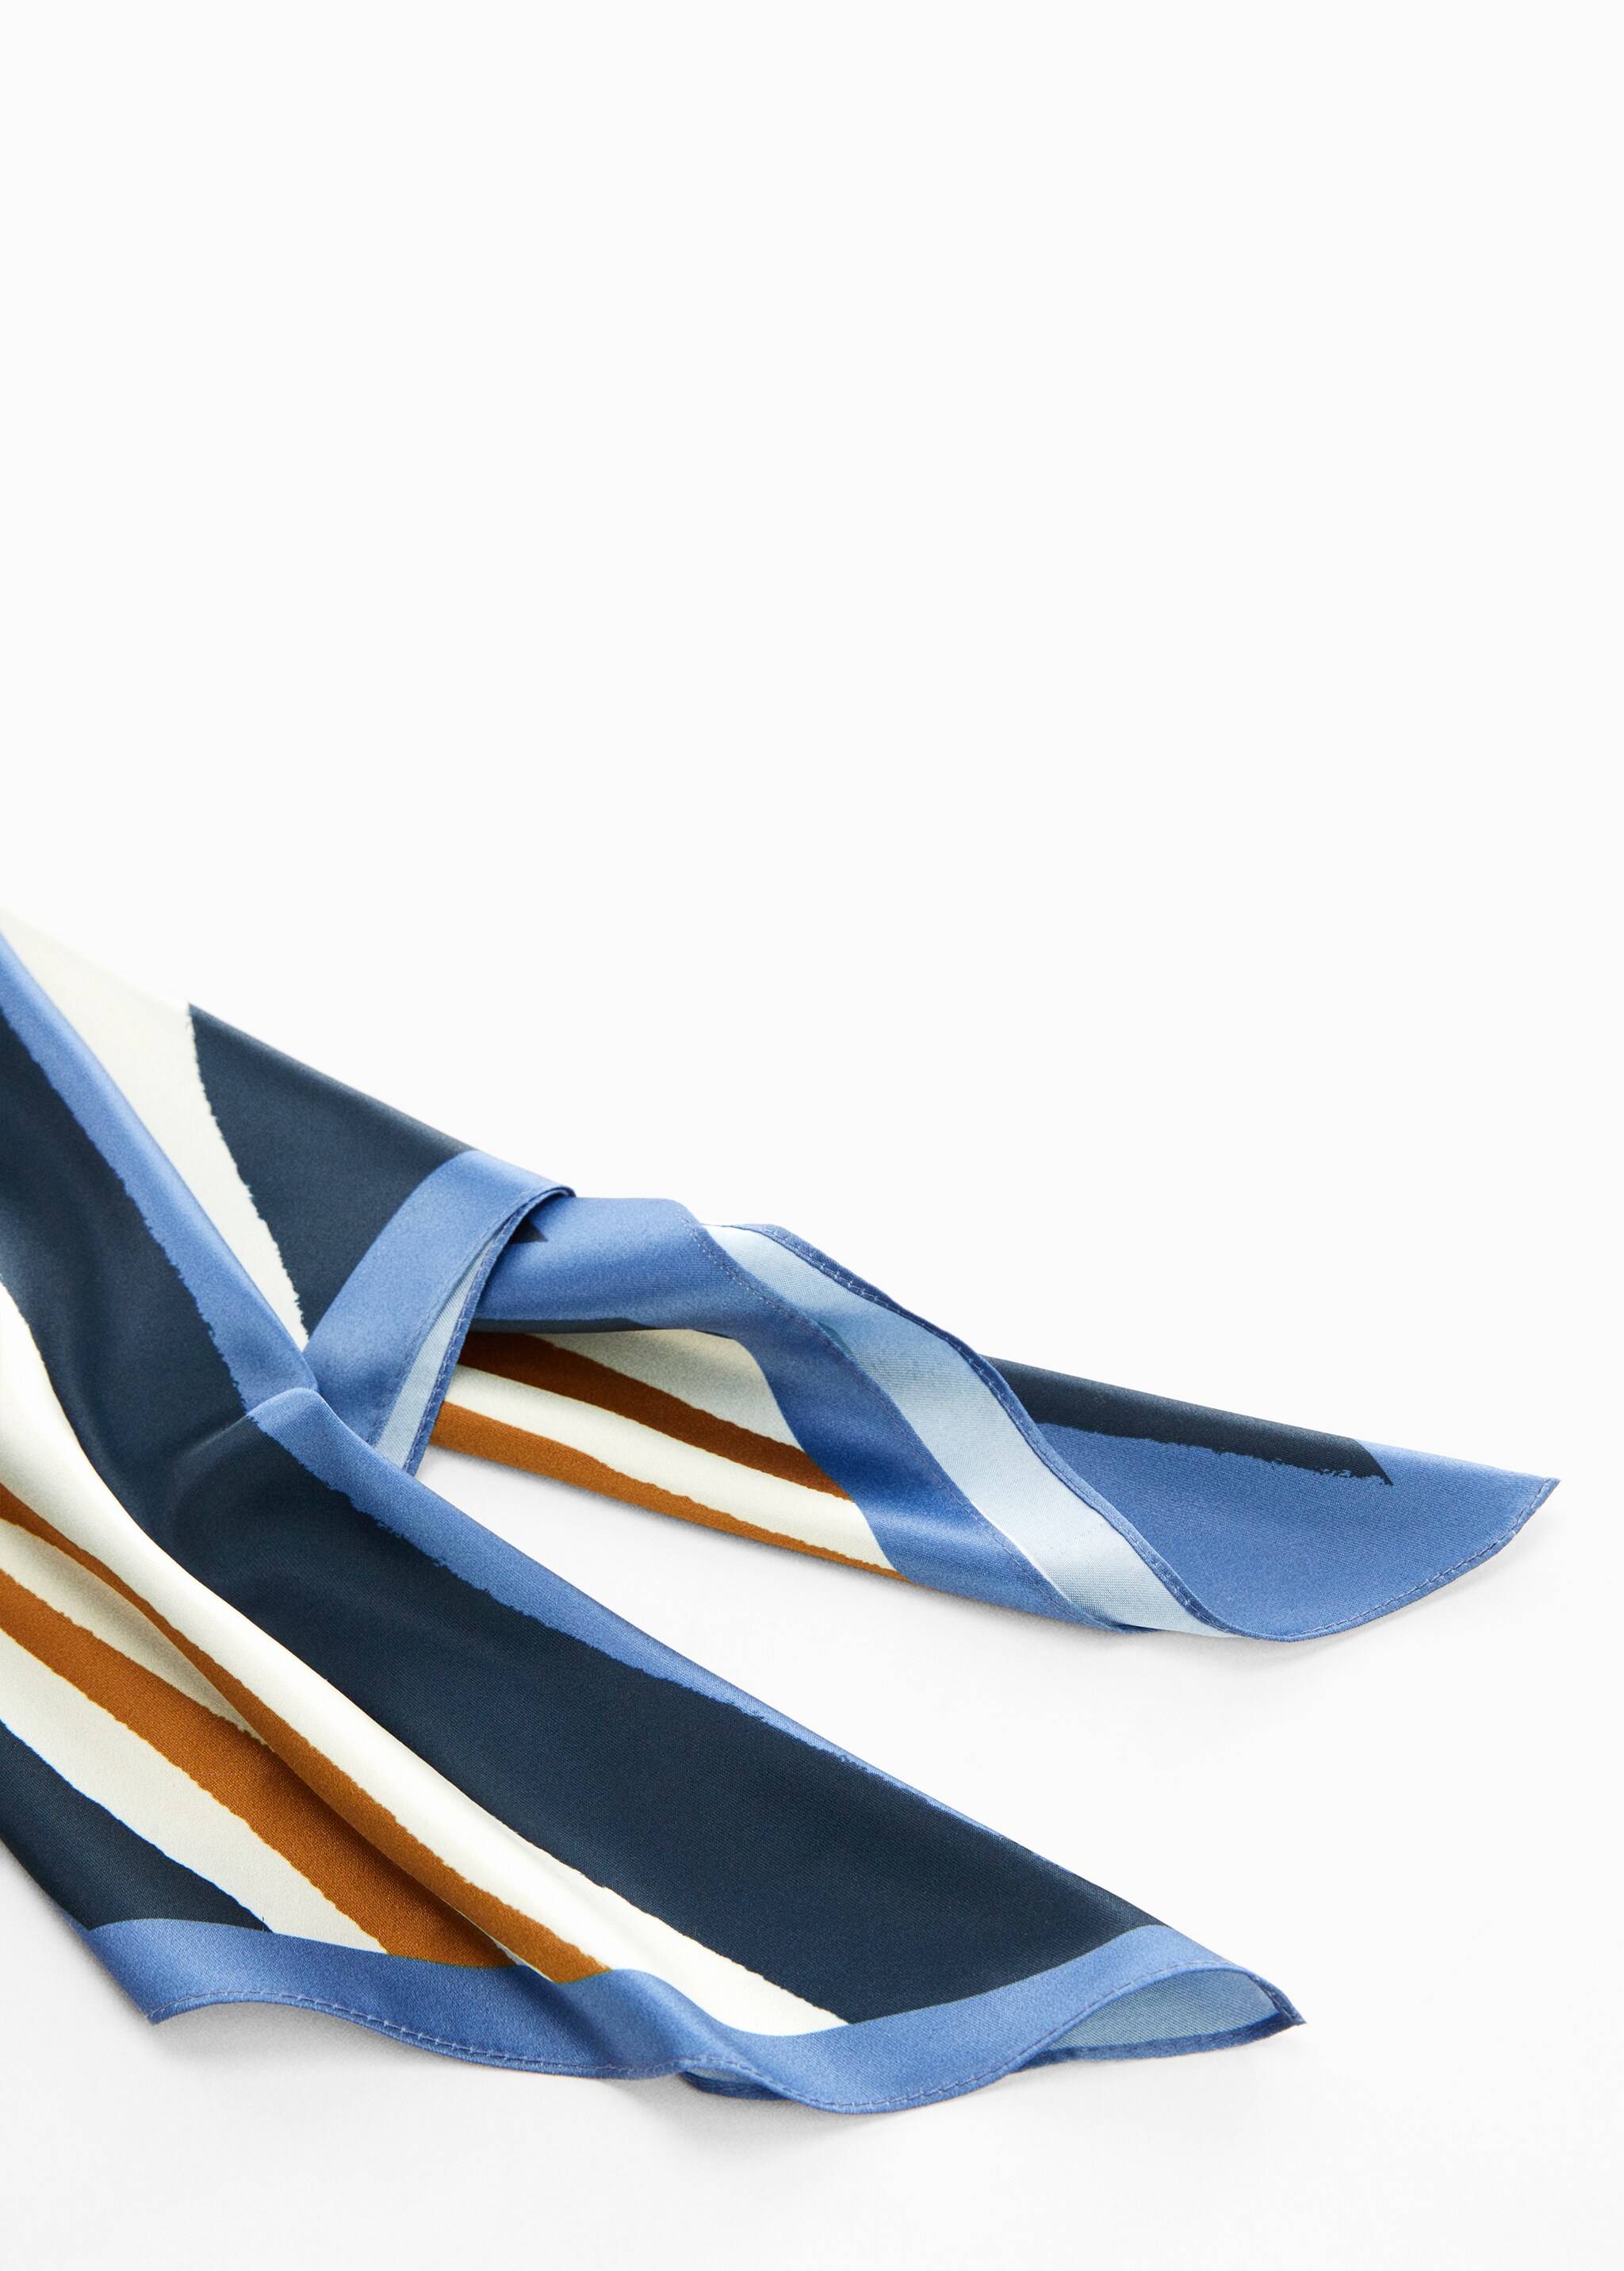 Striped printed scarf - Medium plane